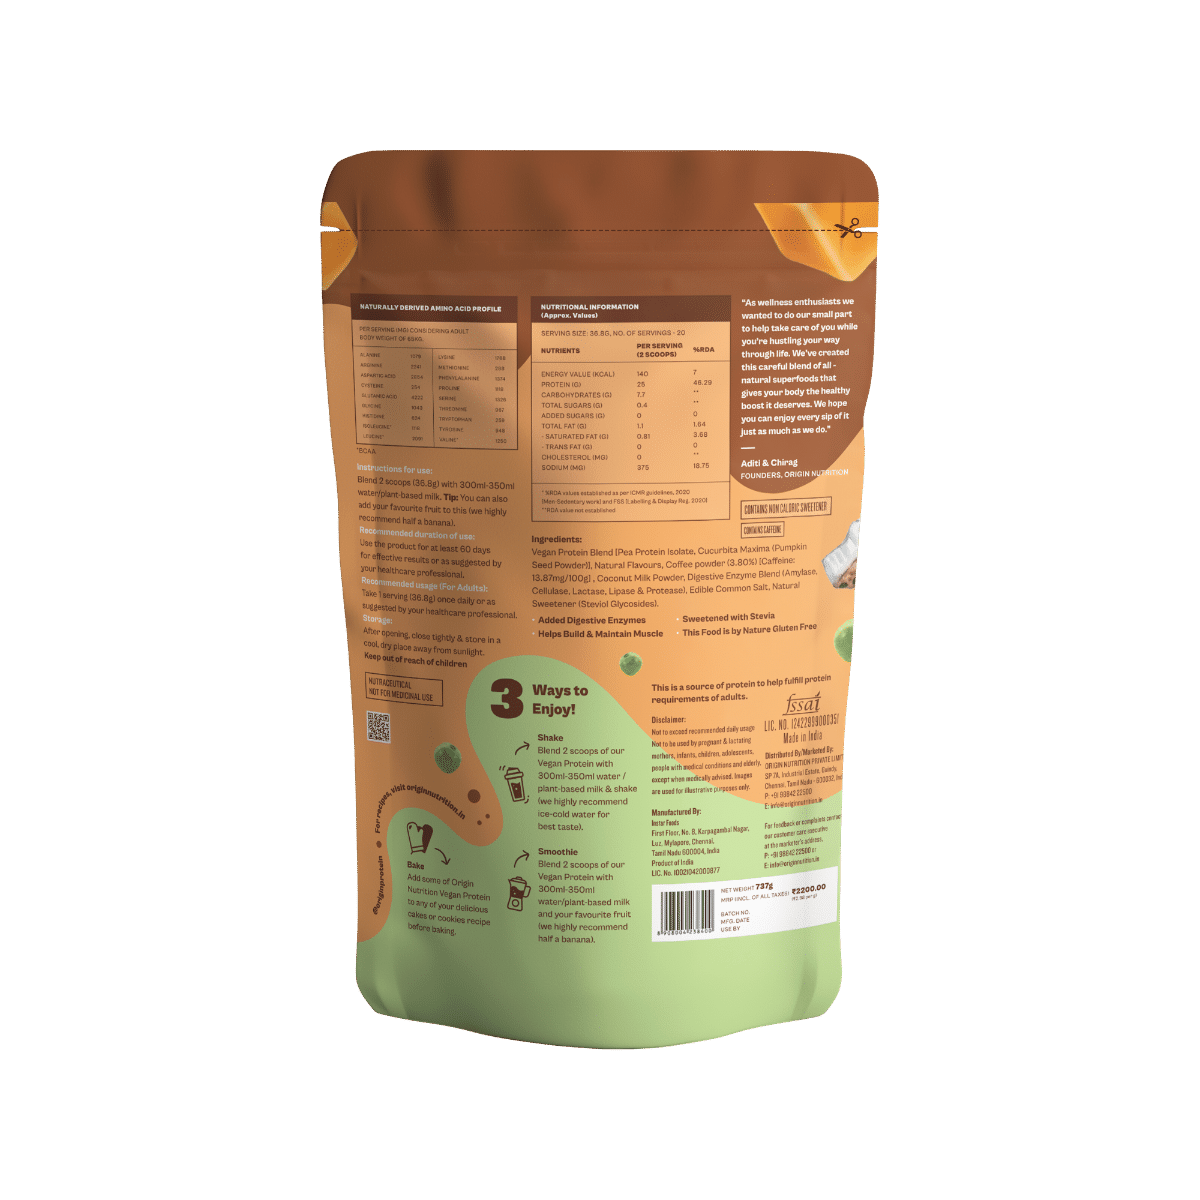 Origin Nutrition 100% Natural Vegan Protein  Coffee Caramel Flavour Powder, 737 gm, Pack of 1 